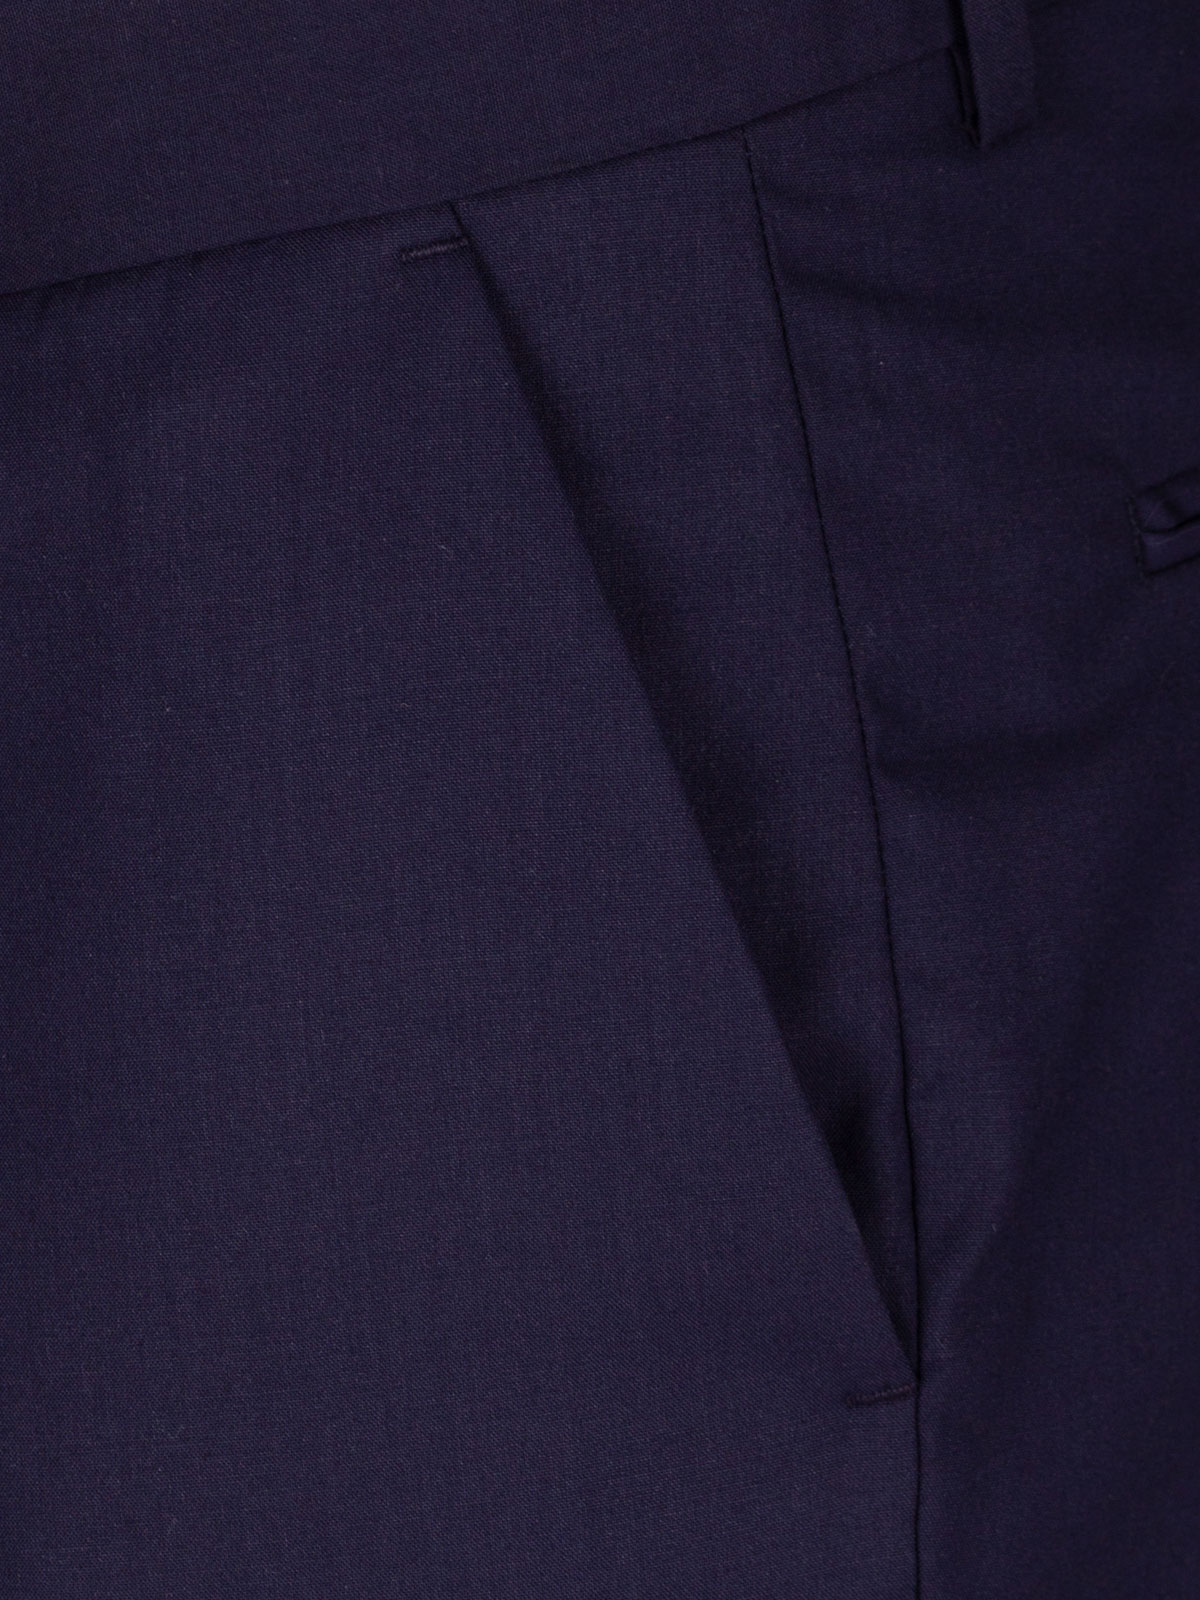 Pantaloni clasici bleumarin - 63328 € 51.74 img2